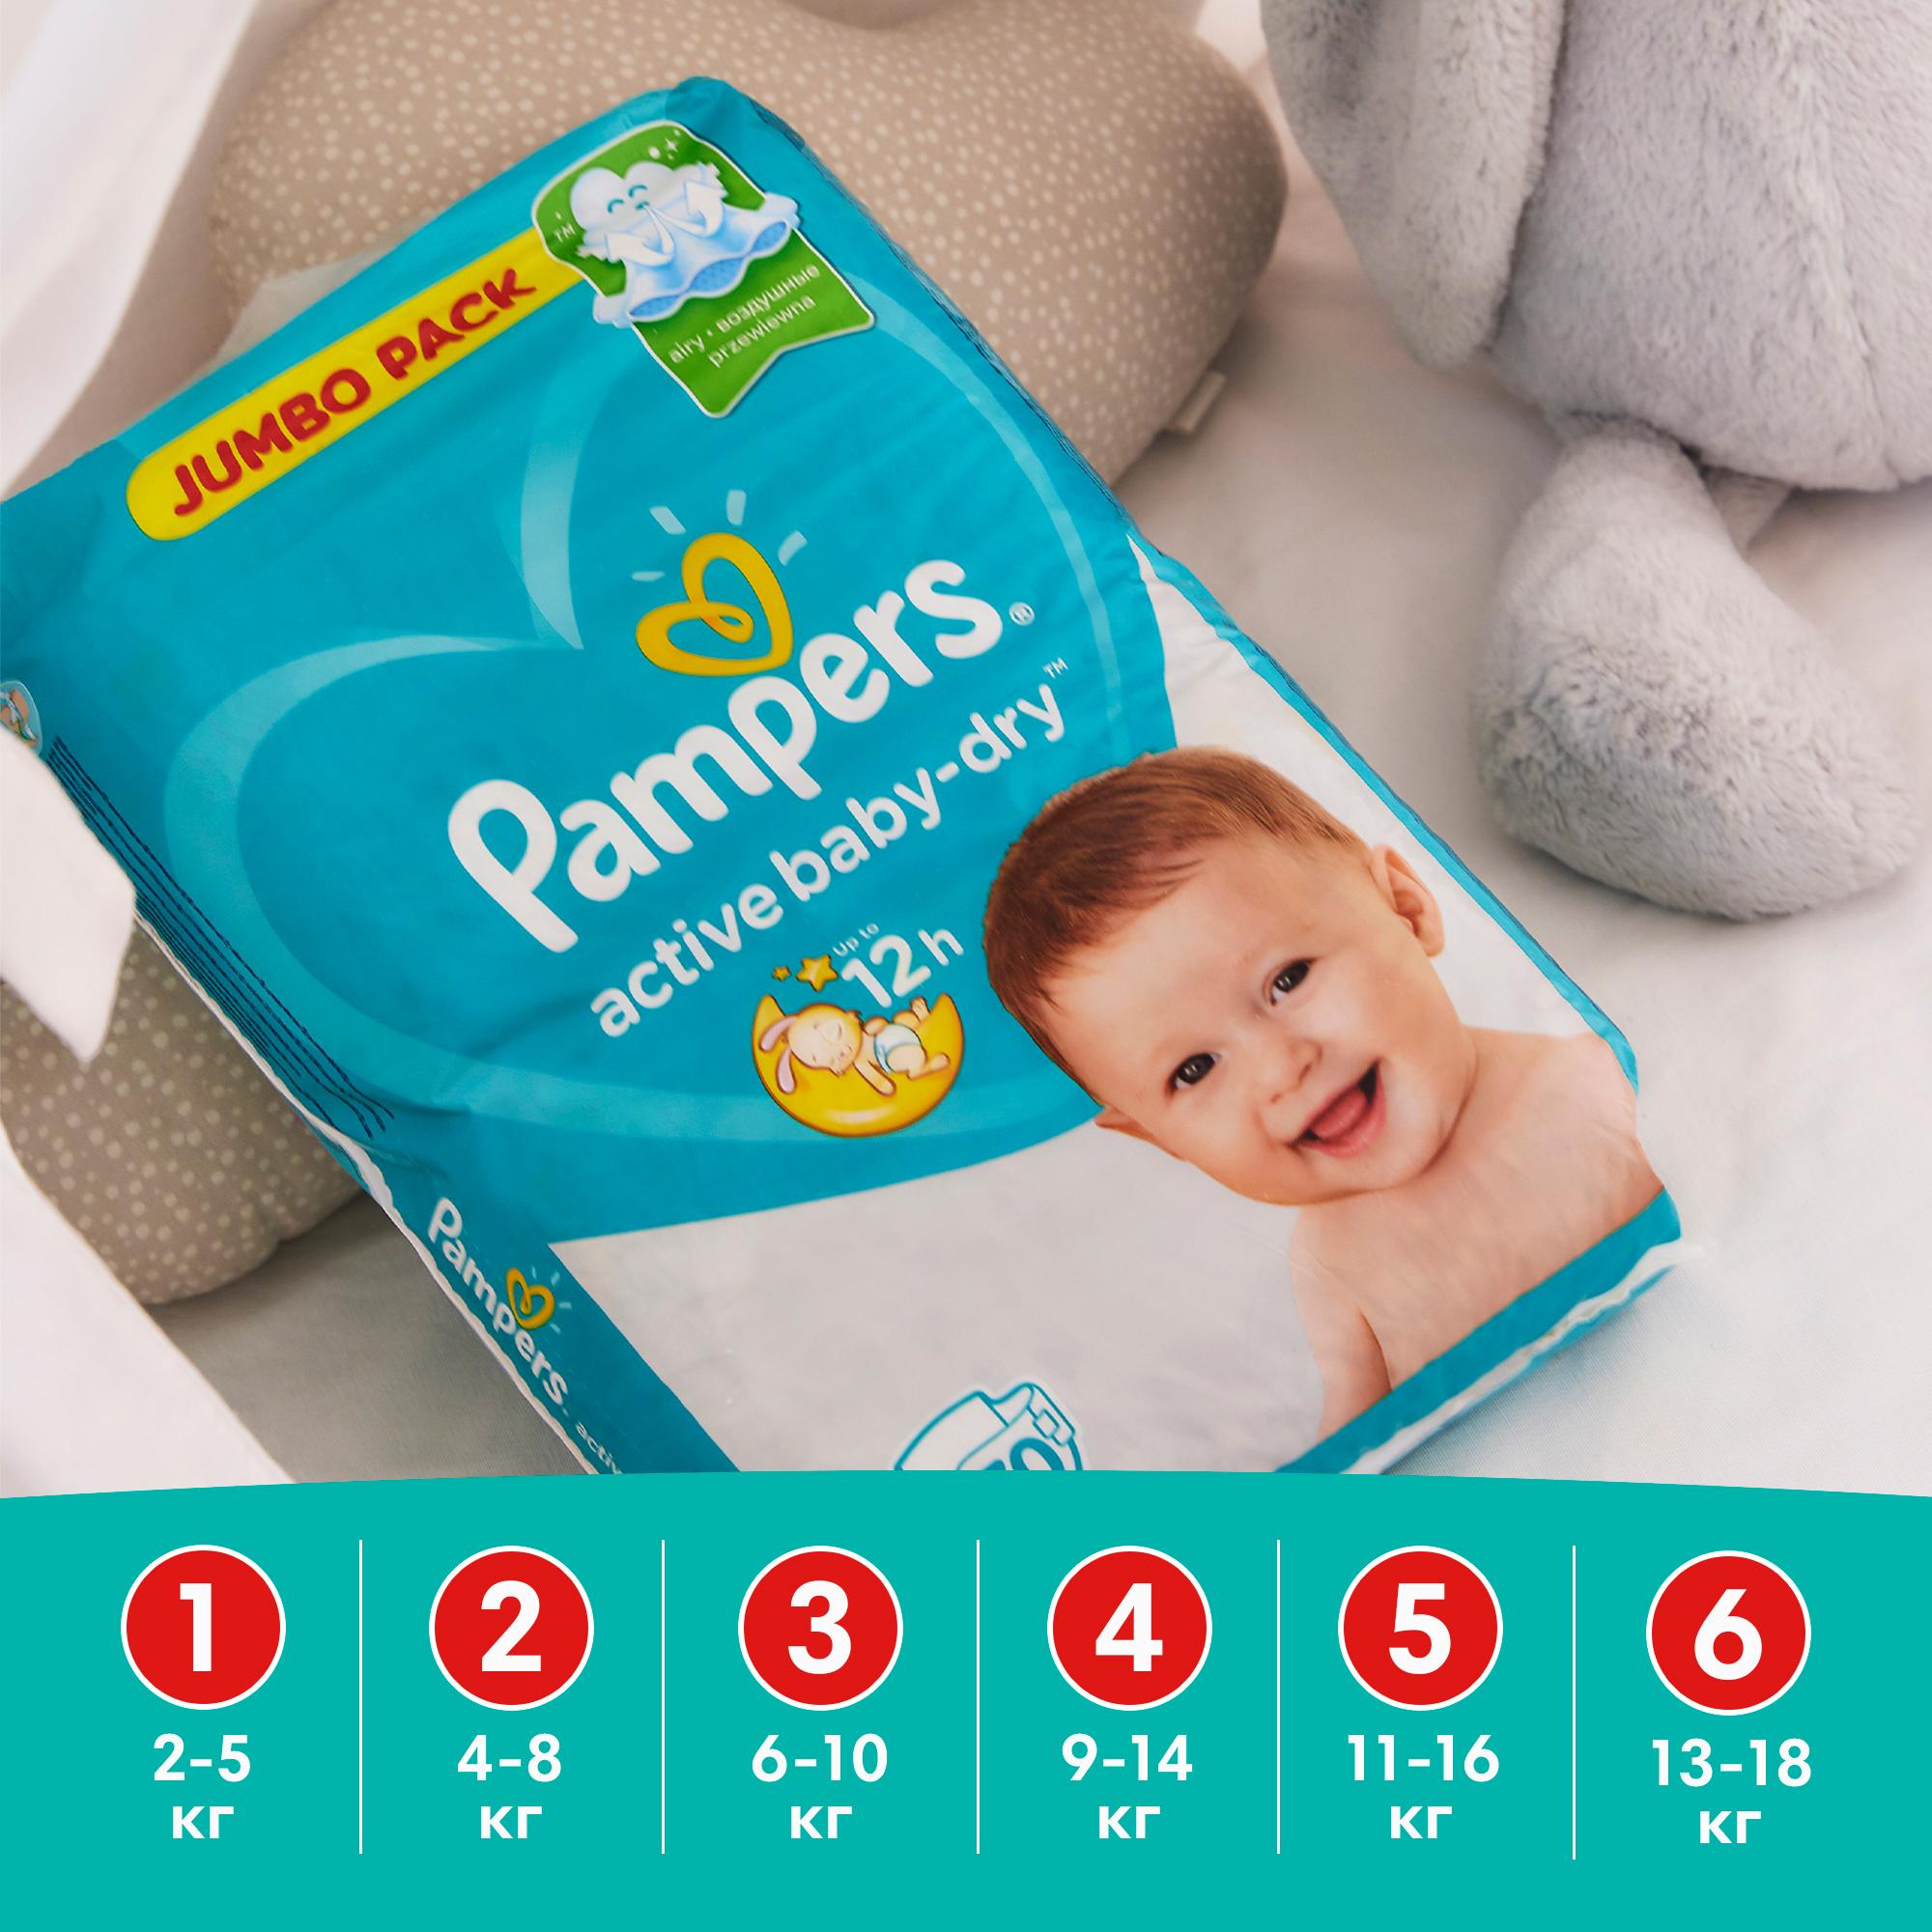 Подгузники Pampers New Baby-Dry 1 2-5кг 94шт - фото 9